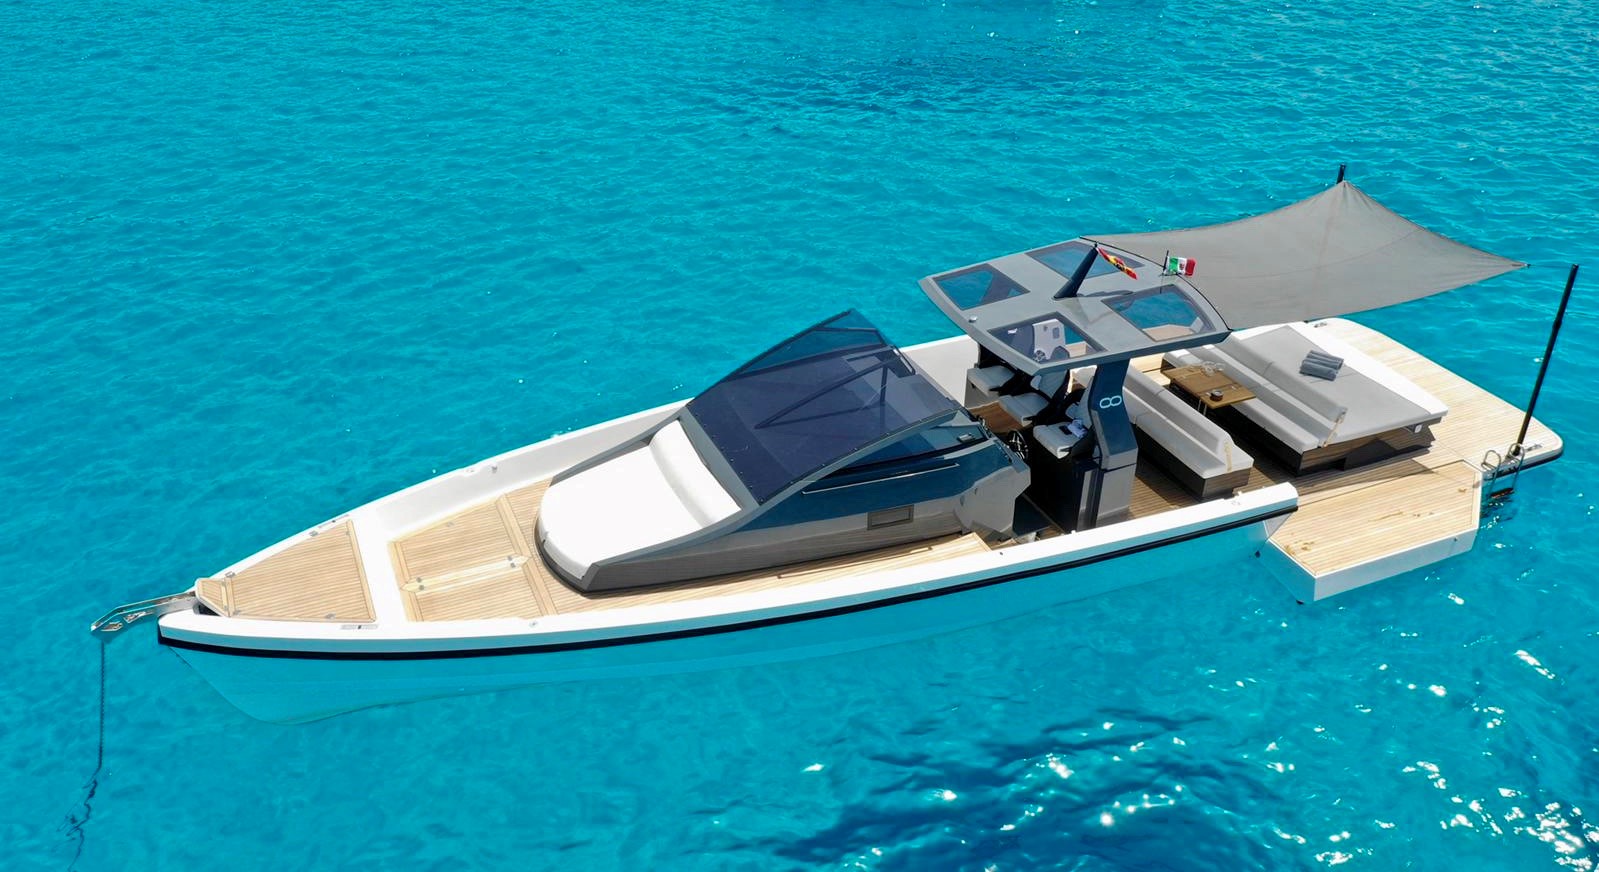 Alquiler rent location llogar barco boat bateau ibiza SeainfinityT4Drive